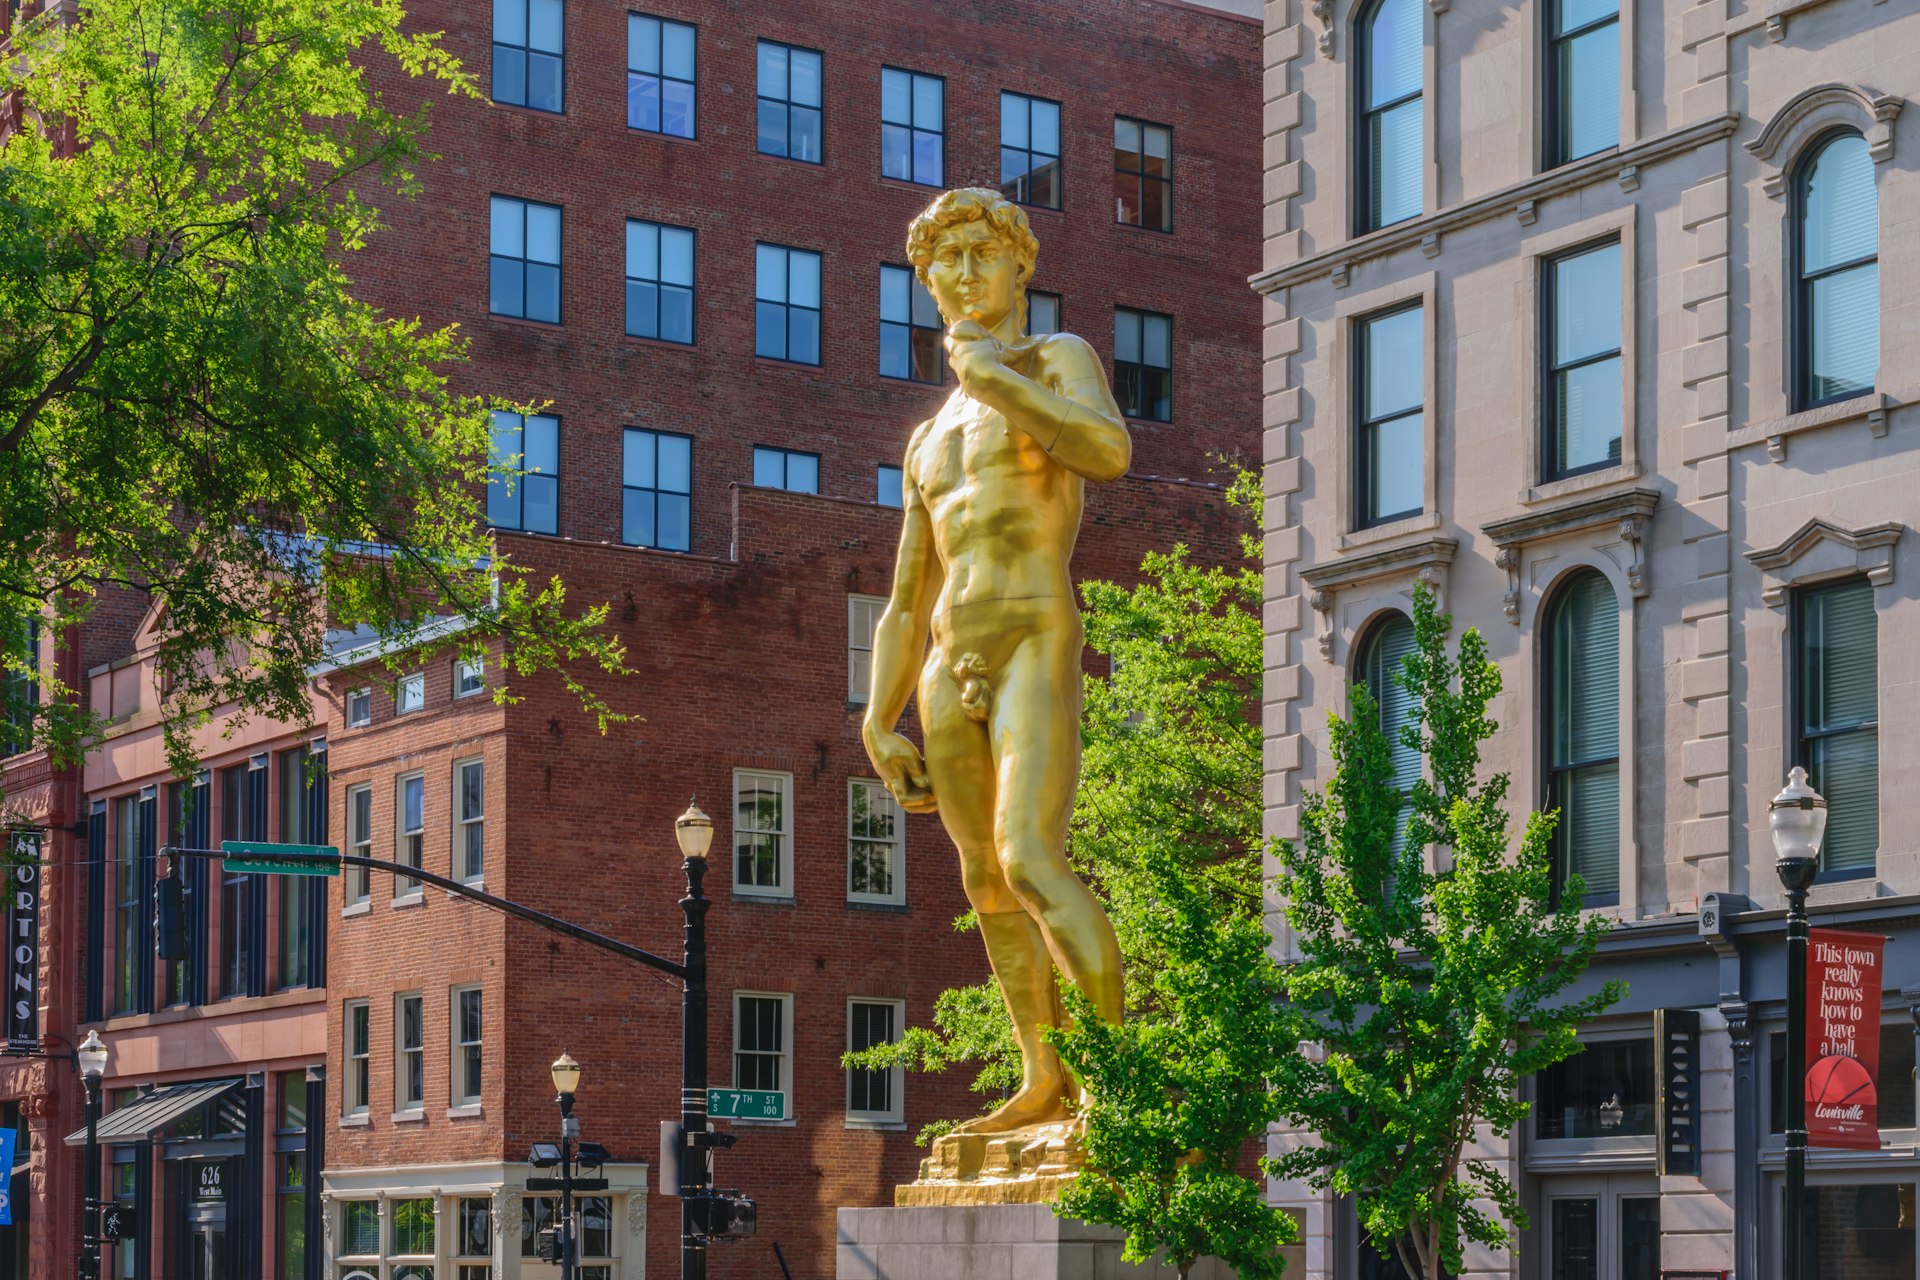 The 21c Museum Hotel's giant golden David statue. David stands 30 feet tall on Main Street in Louisville Kentucky.